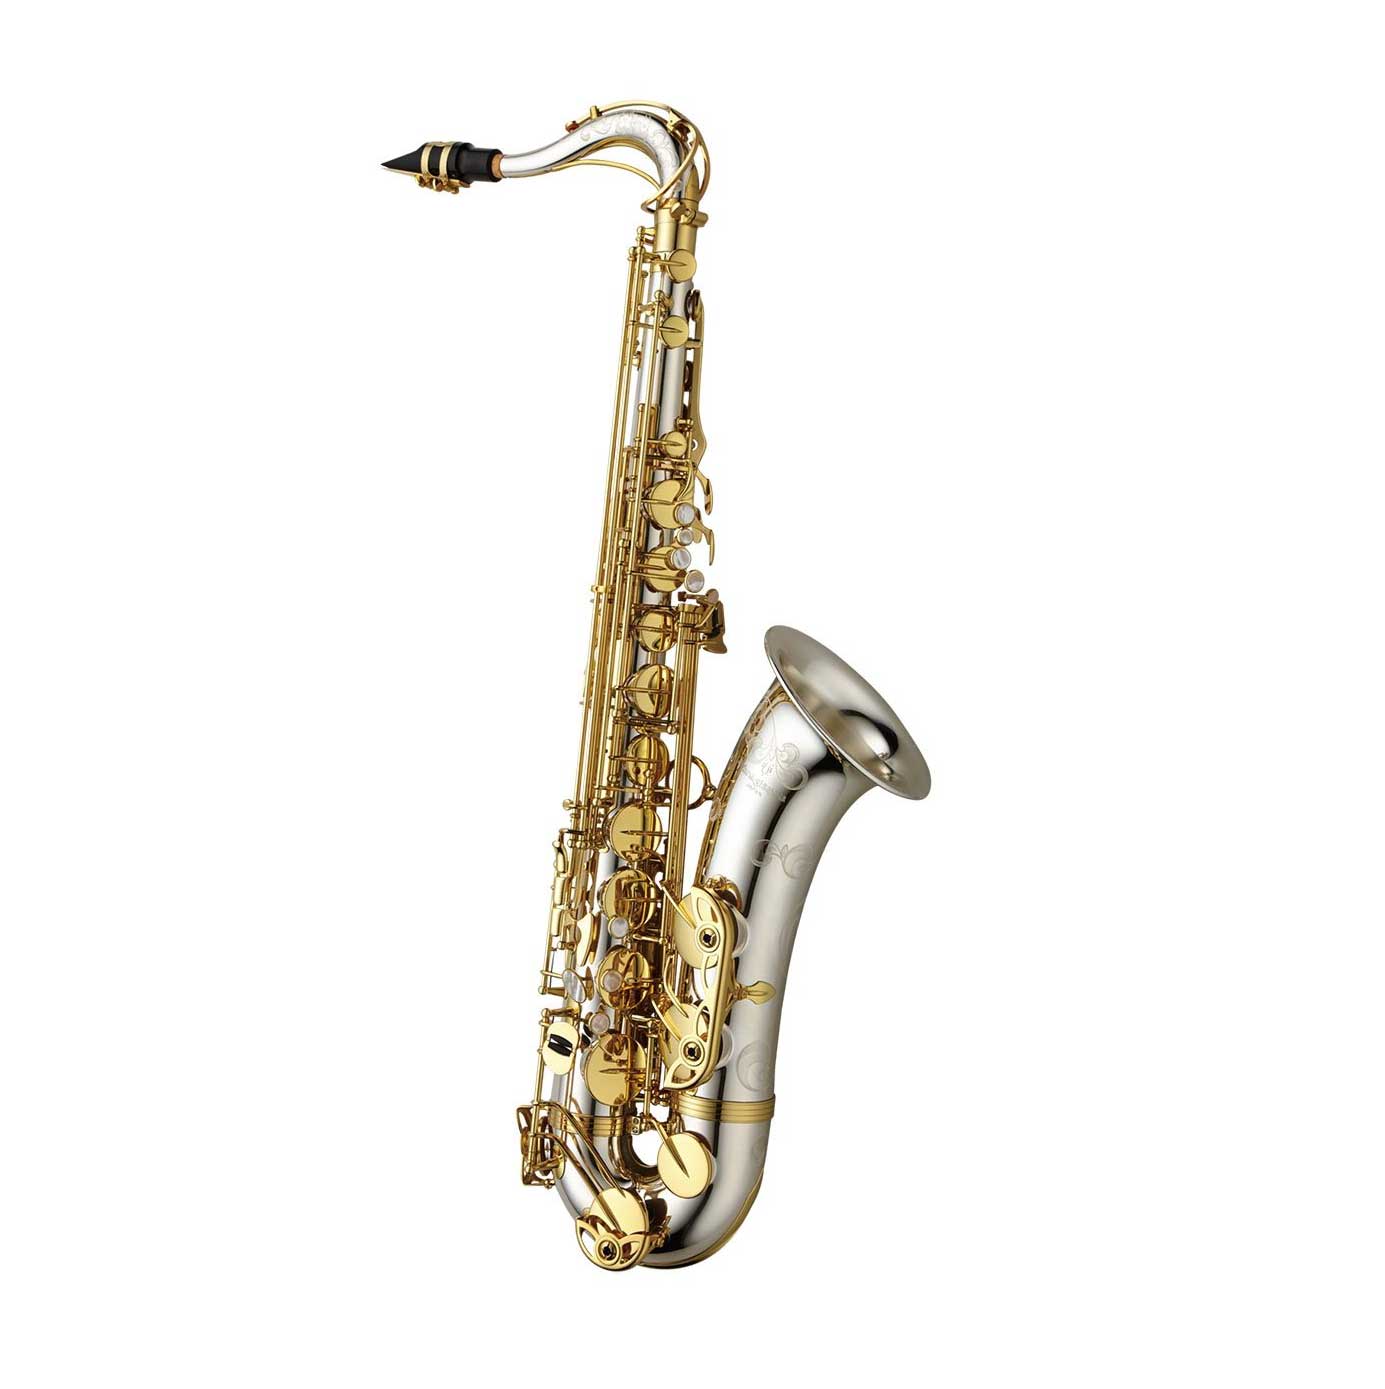 yanagisawa-two37-tenor-saxophone-solid-silver-6010400-1600_574x1200_1410cc49-20c0-422e-a450-3ed03cb7382c_1385x1389_174233.jpg